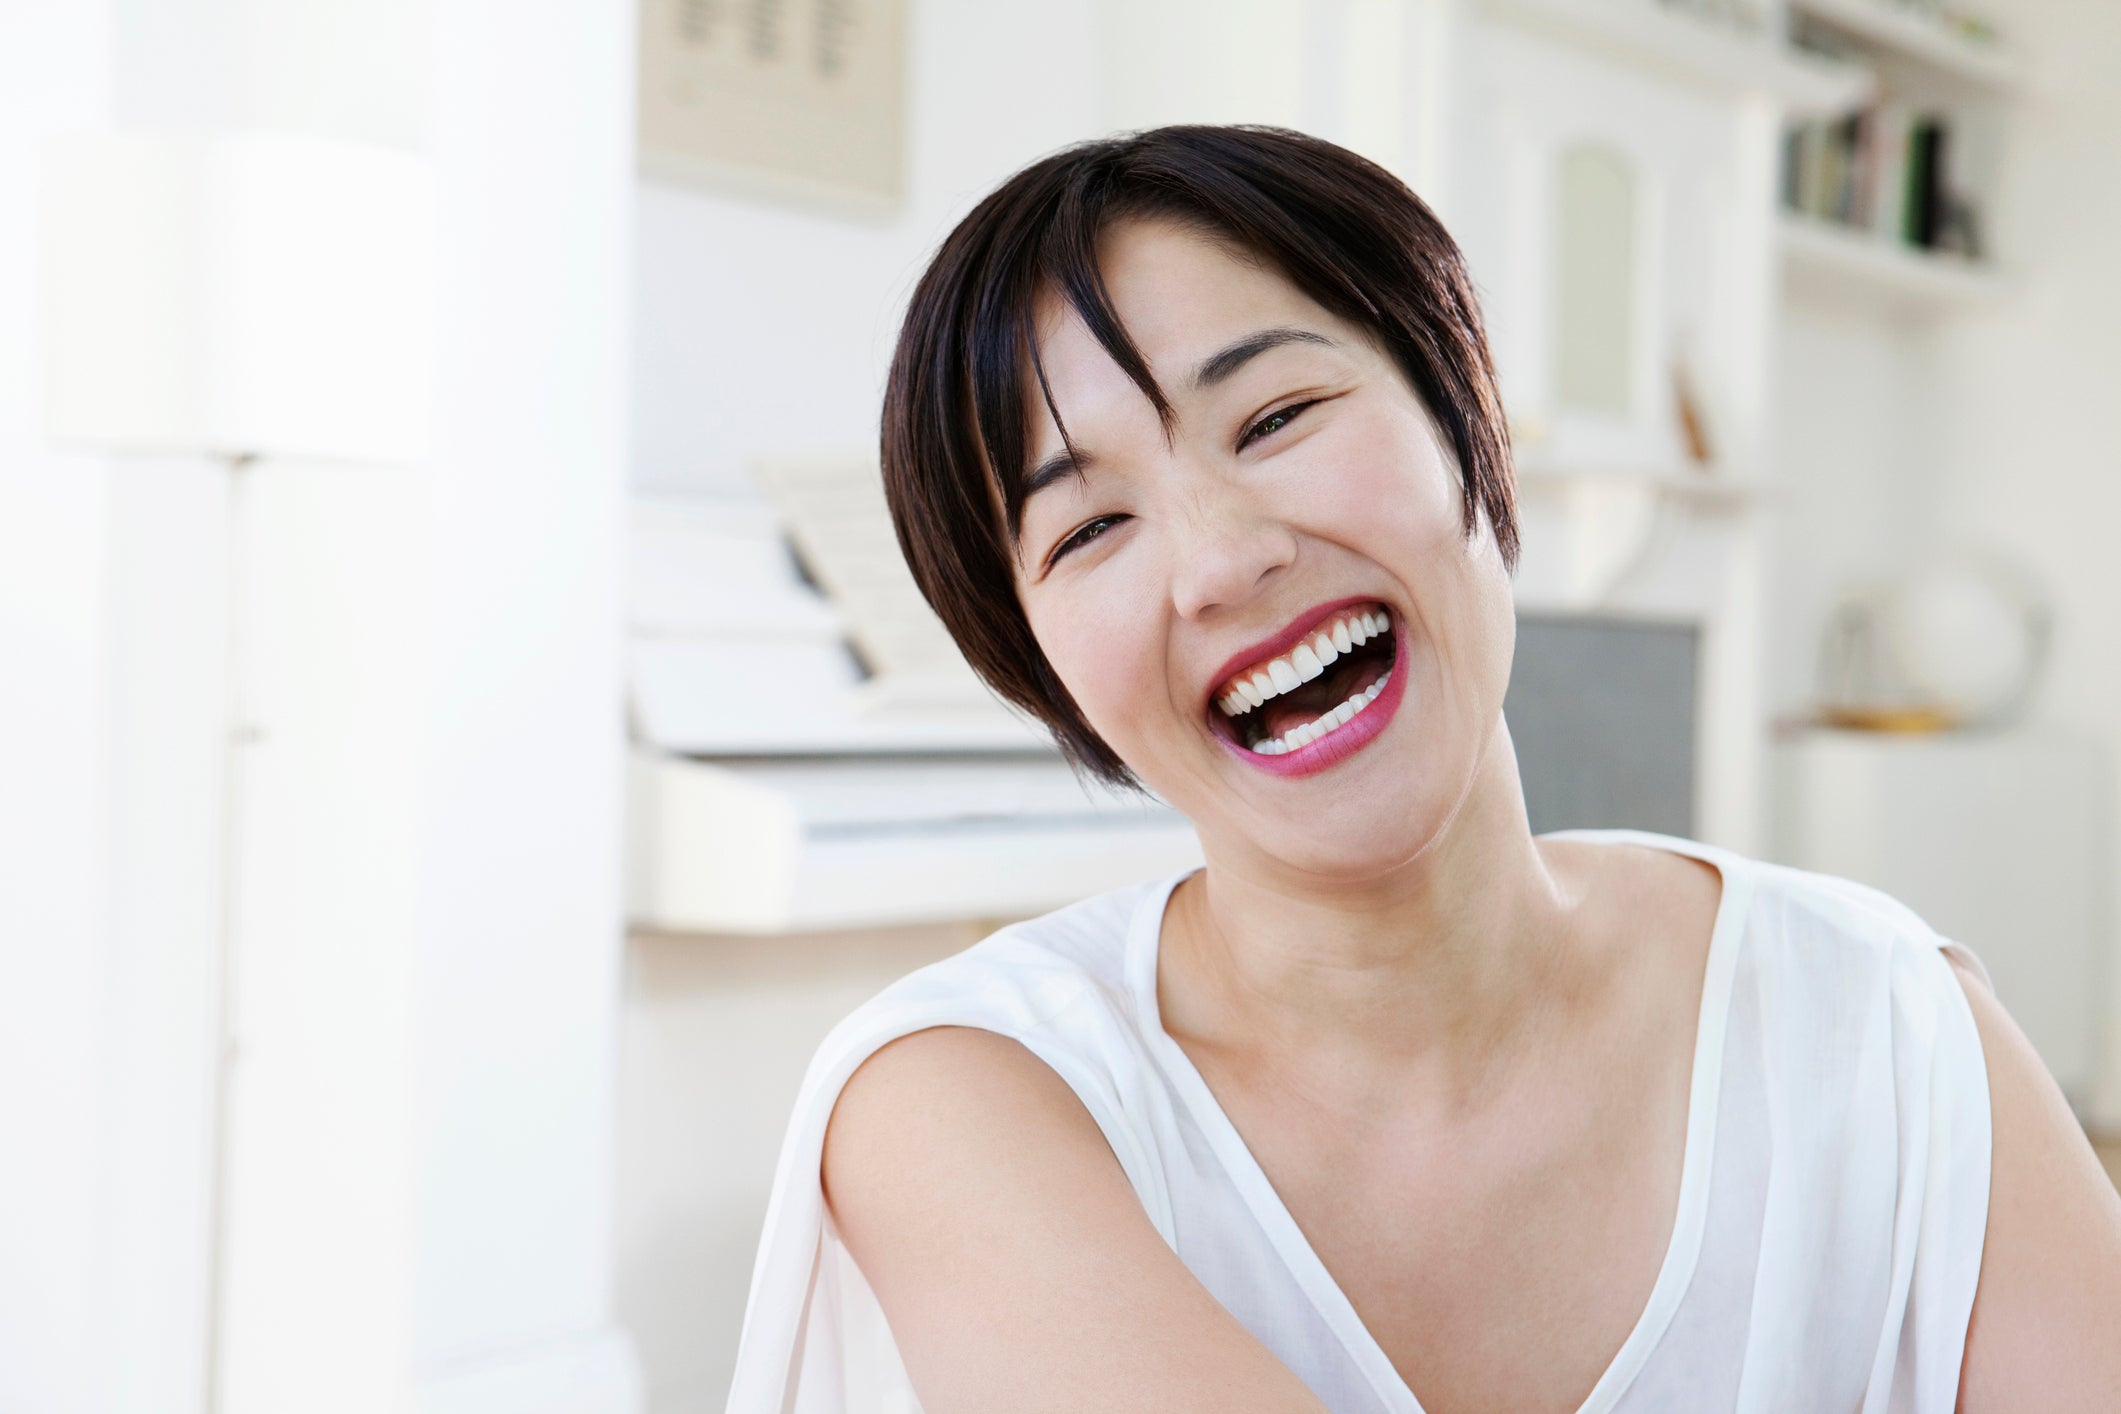 Why Do We Laugh? - Scientific American